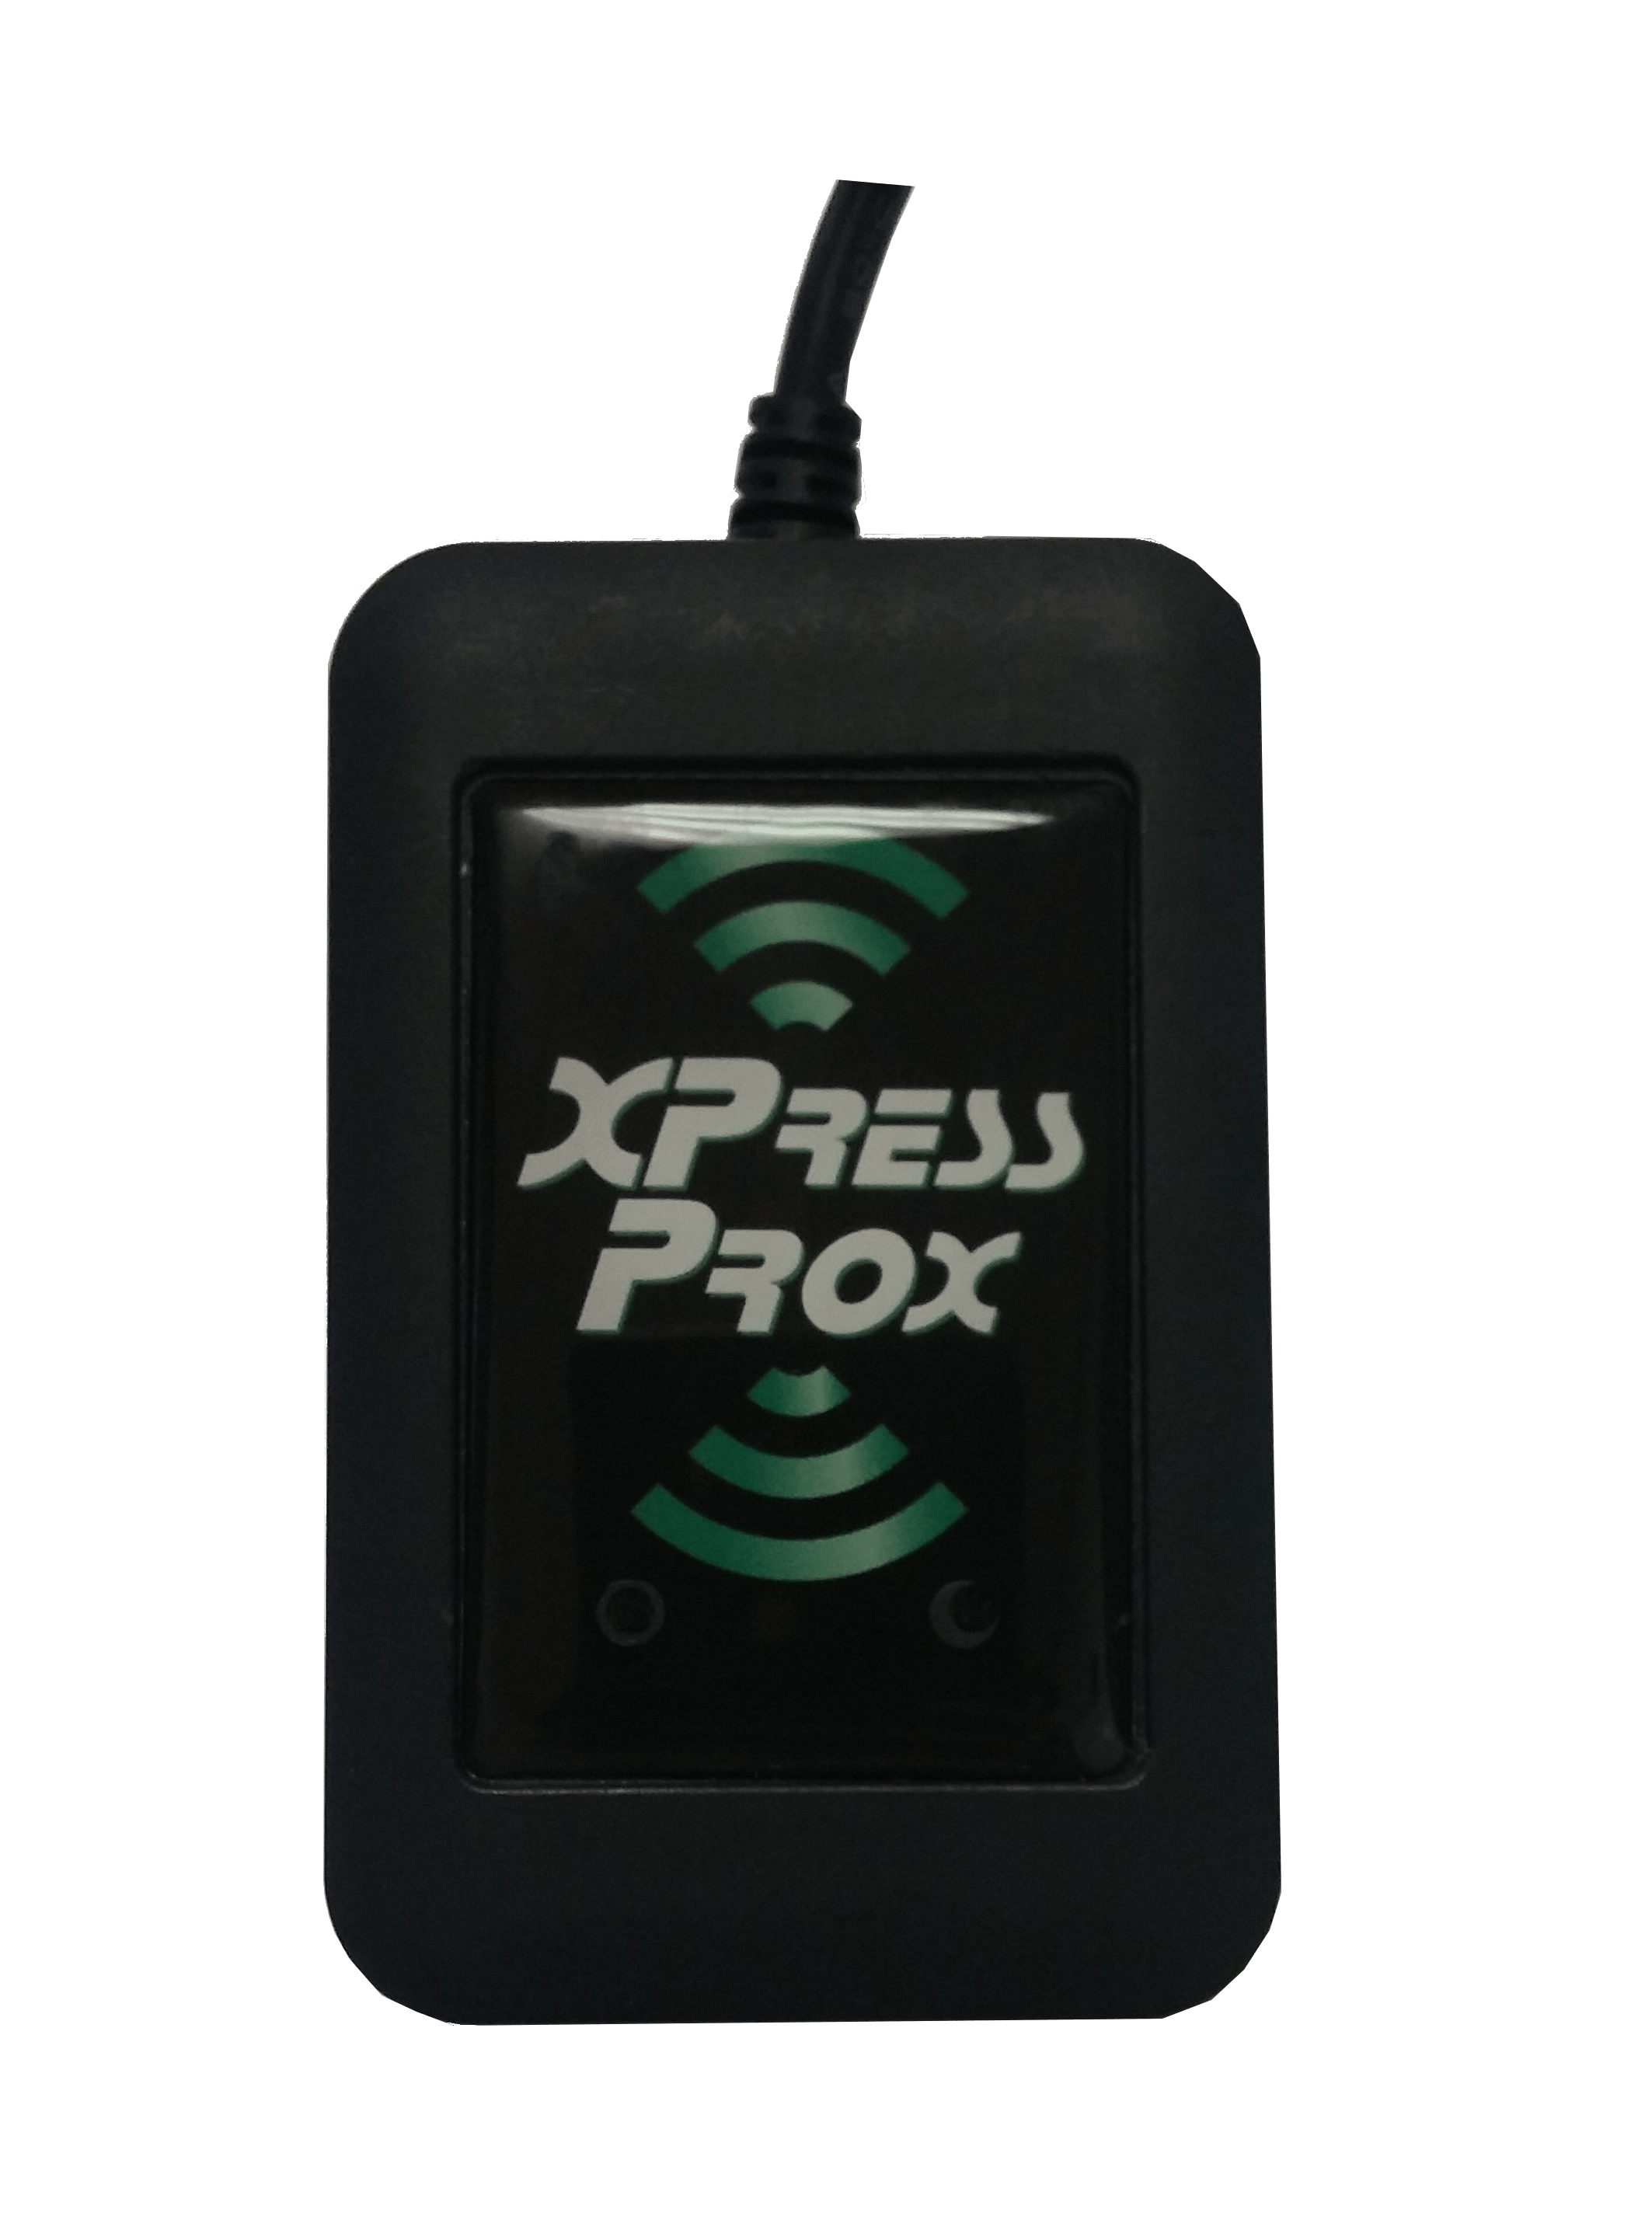 XPressProx- ի աշխատասեղանի USB- ի նշան կարդացող սարքը